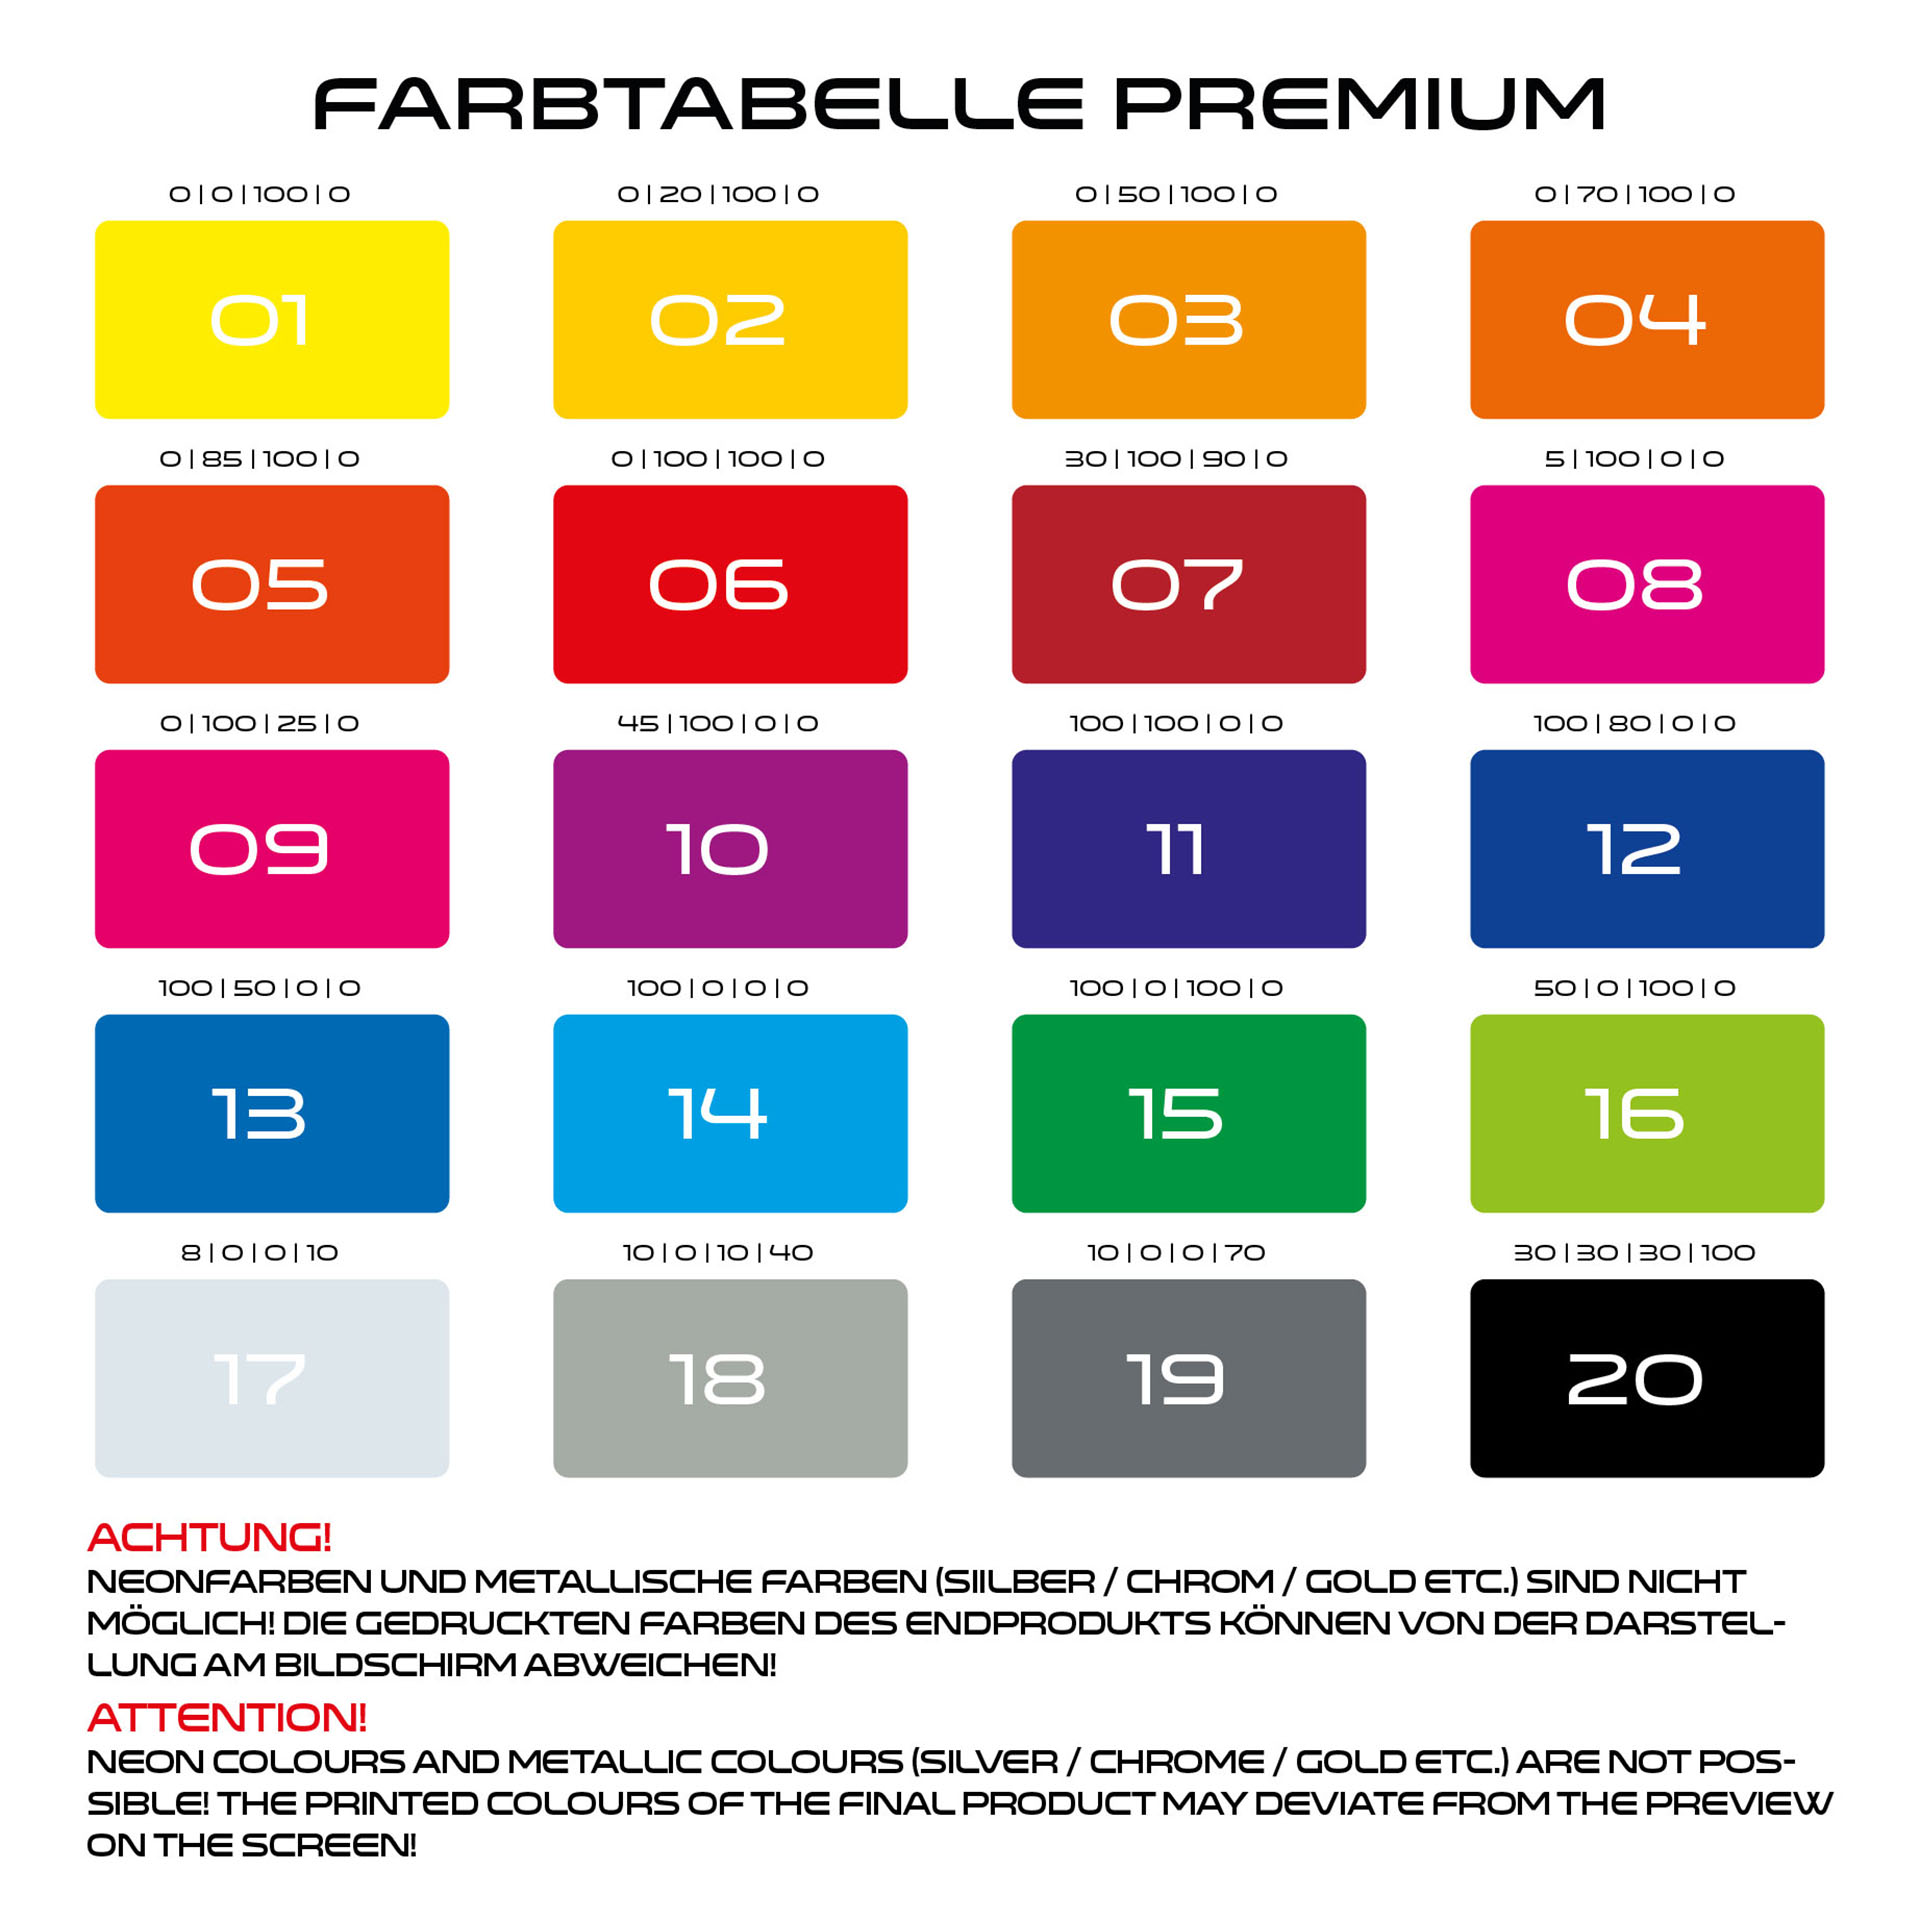 Renngrib V4 Felgenaufkleber Premium Farbtabelle Premium Wheelsticker